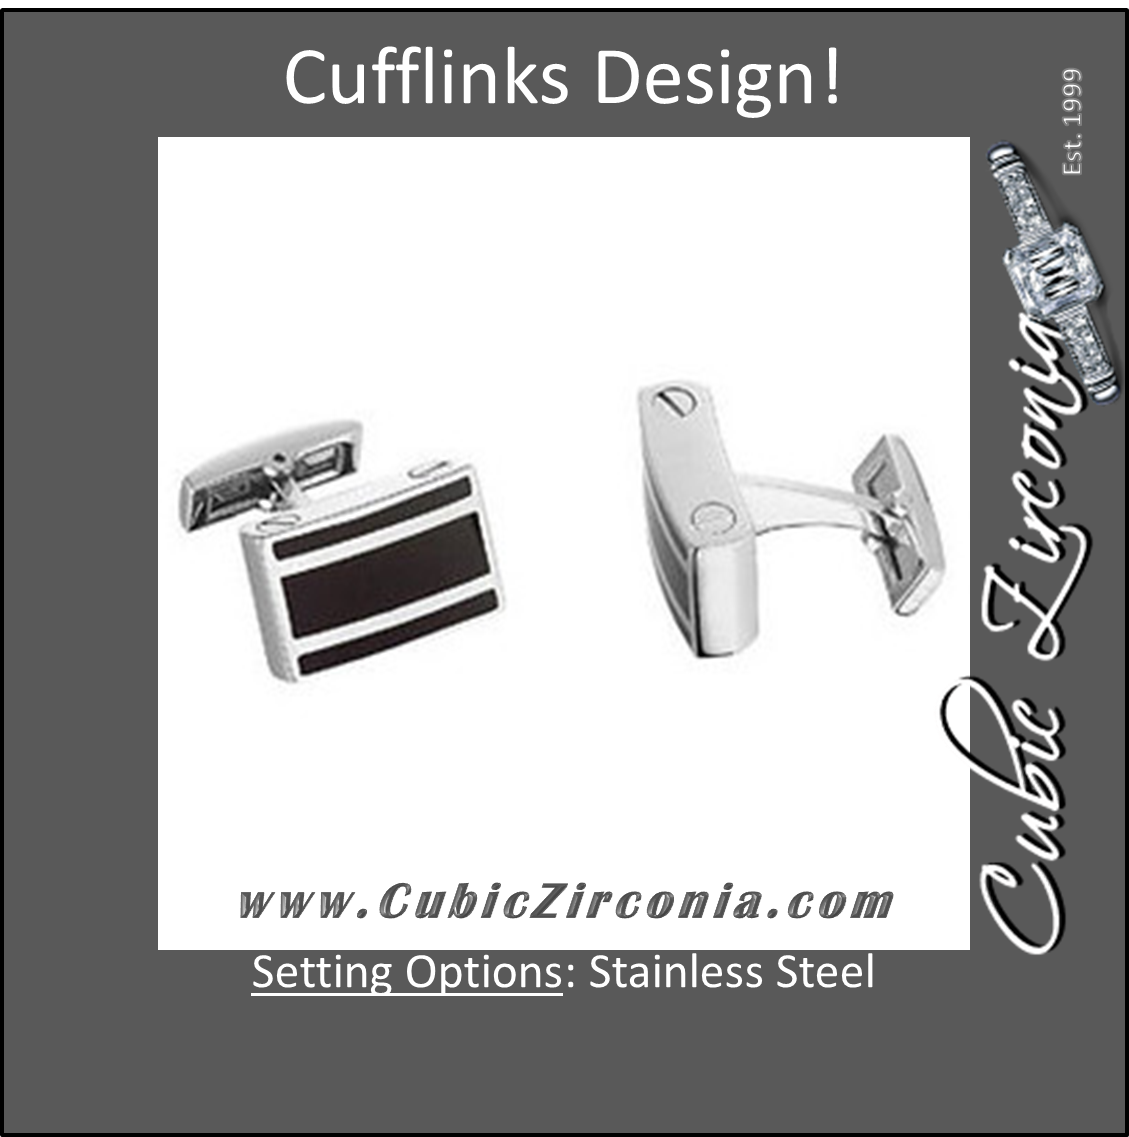 Men’s Cufflinks- Stainless Steel & Black Enamel with Stripes